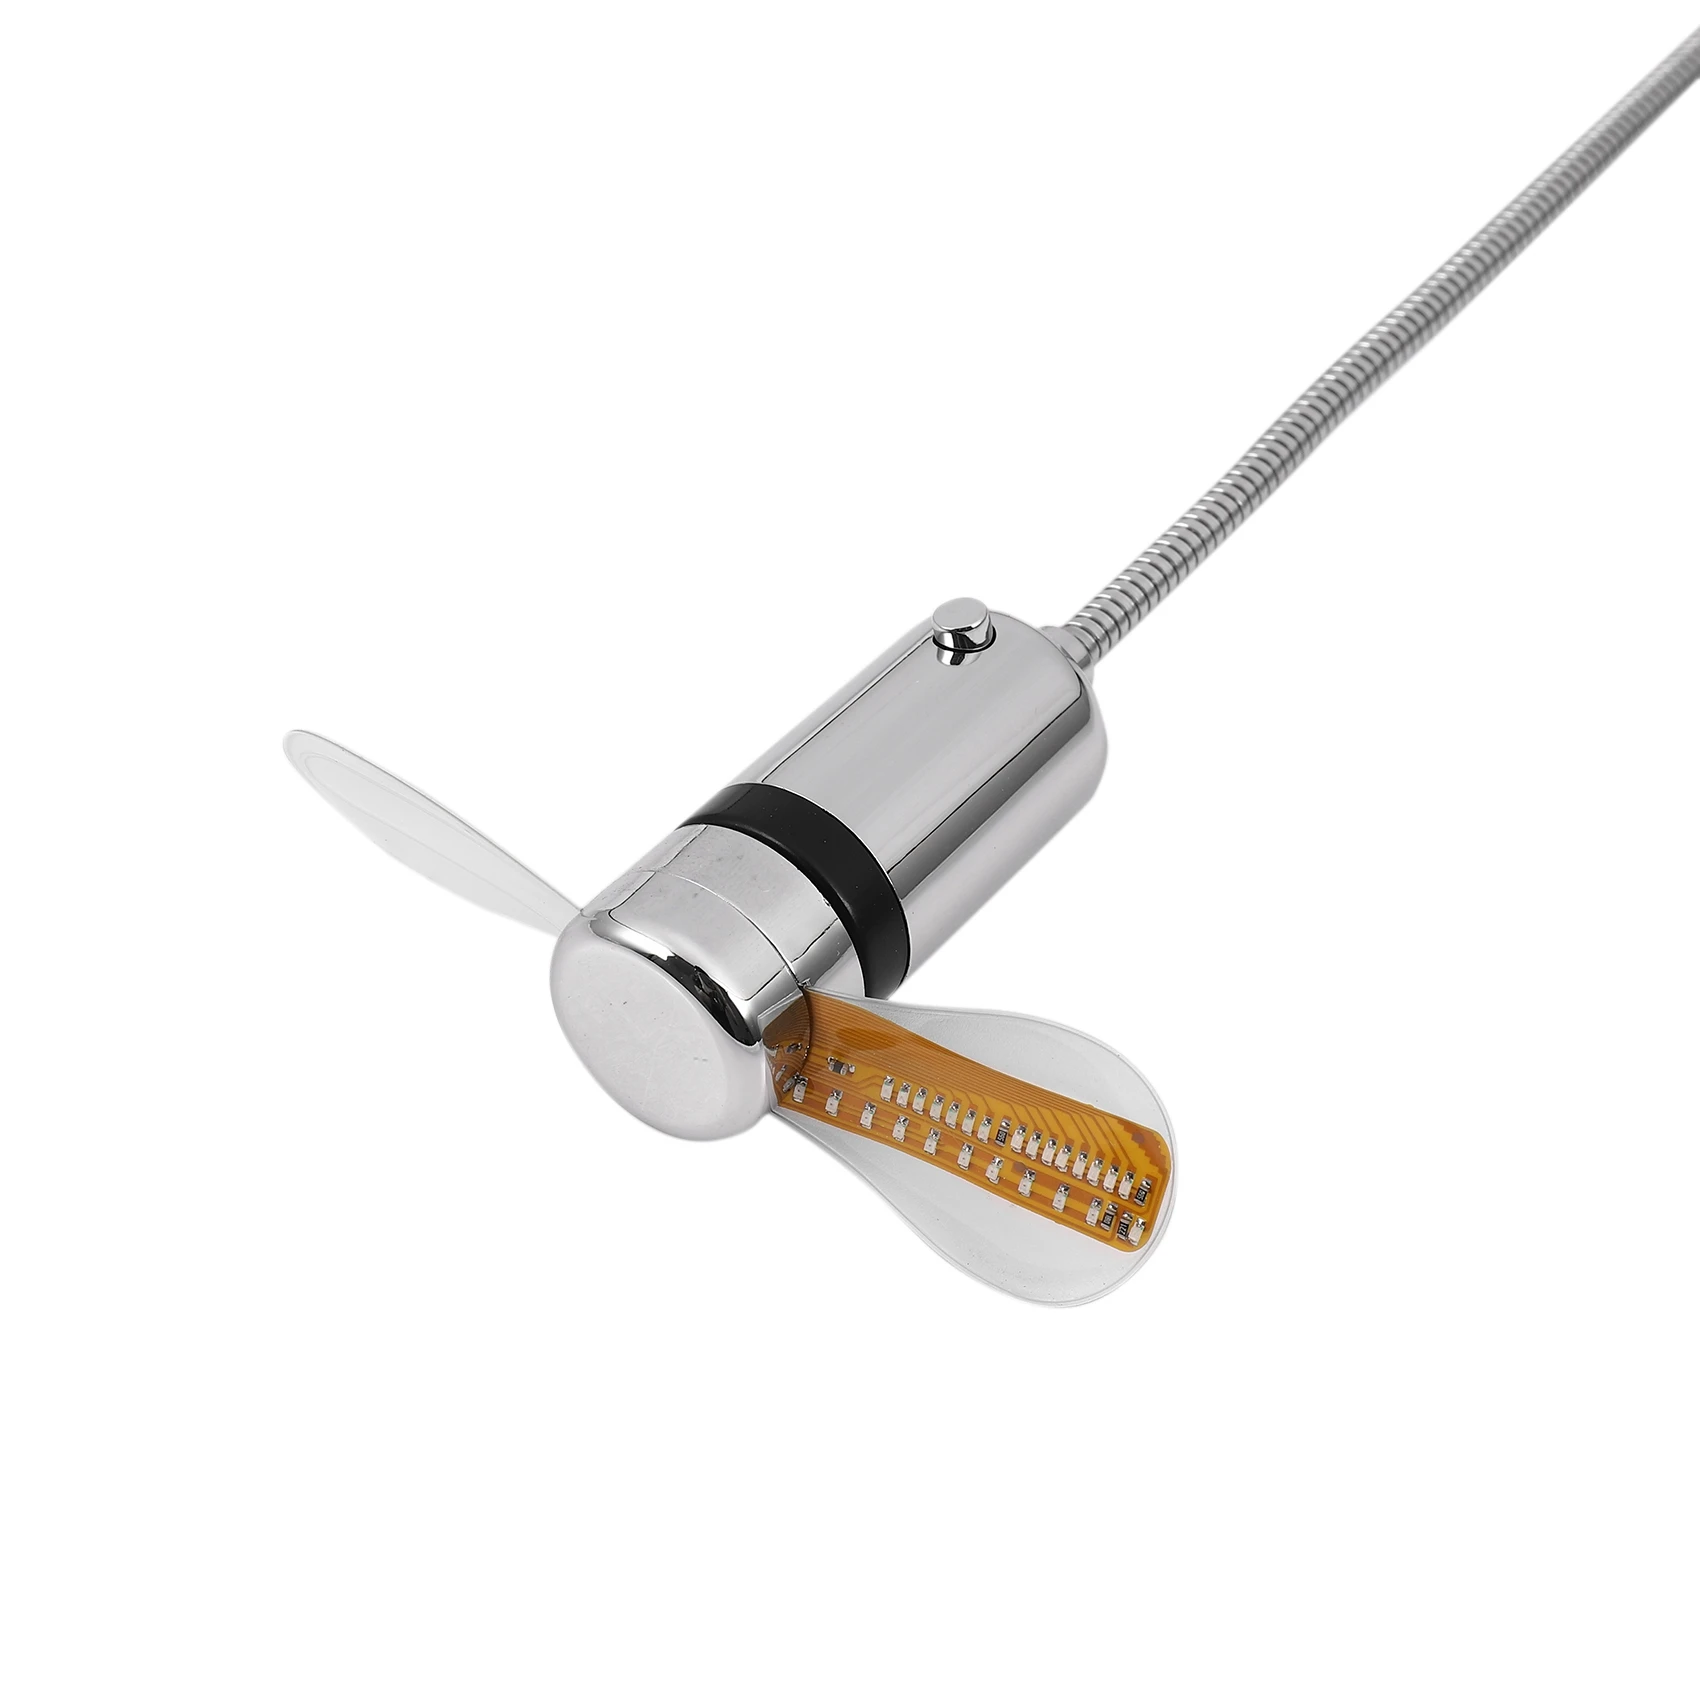 USB מיני אוהדים תצוגת זמן וטמפרטורה יצירתי מתנה עם אור LED מגניב גאדג ' ט עבור מחשב נייד מחשב - 4